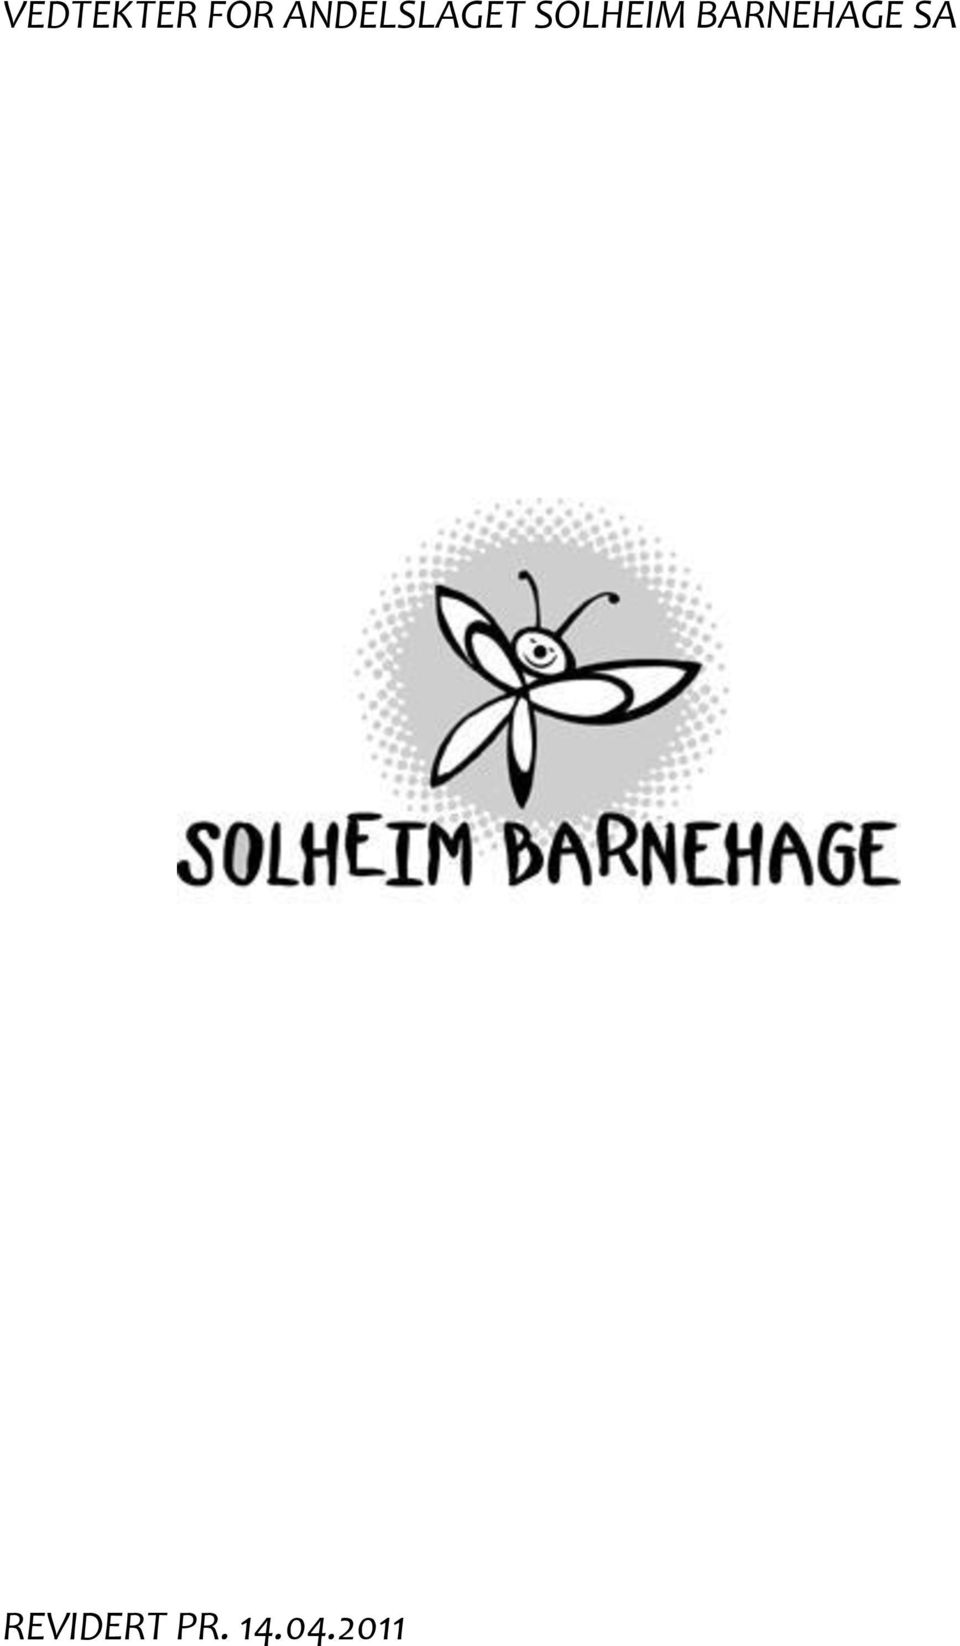 SOLHEIM BARNEHAGE